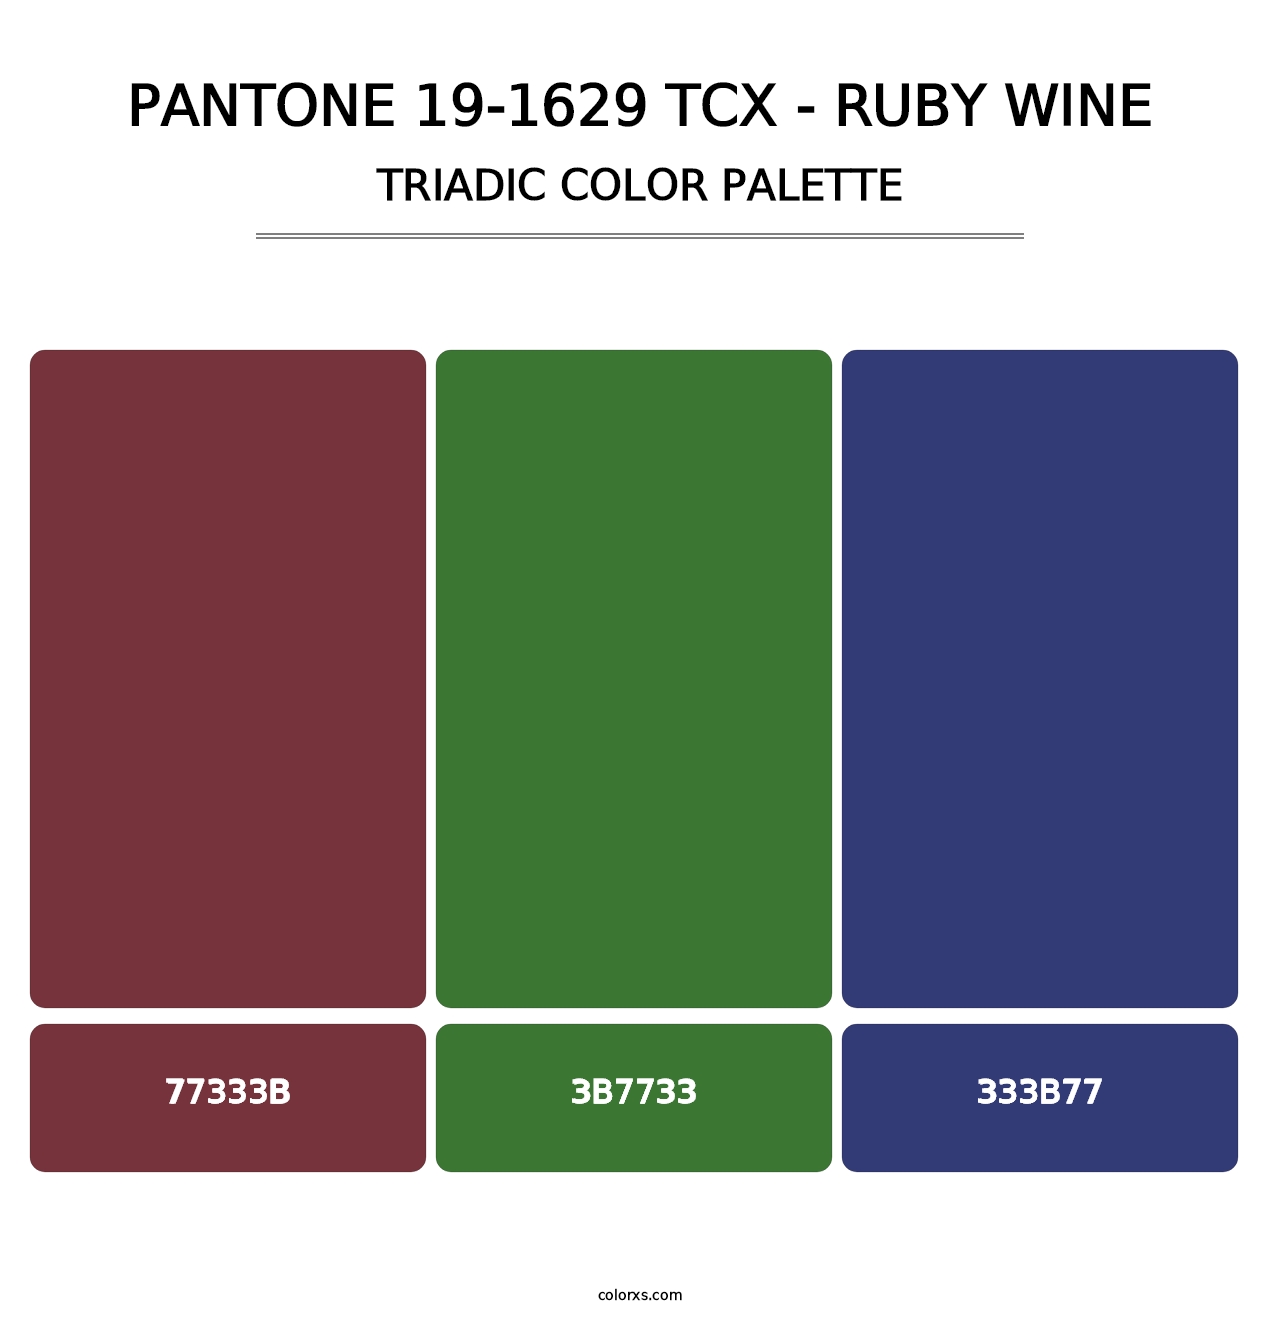 PANTONE 19-1629 TCX - Ruby Wine - Triadic Color Palette